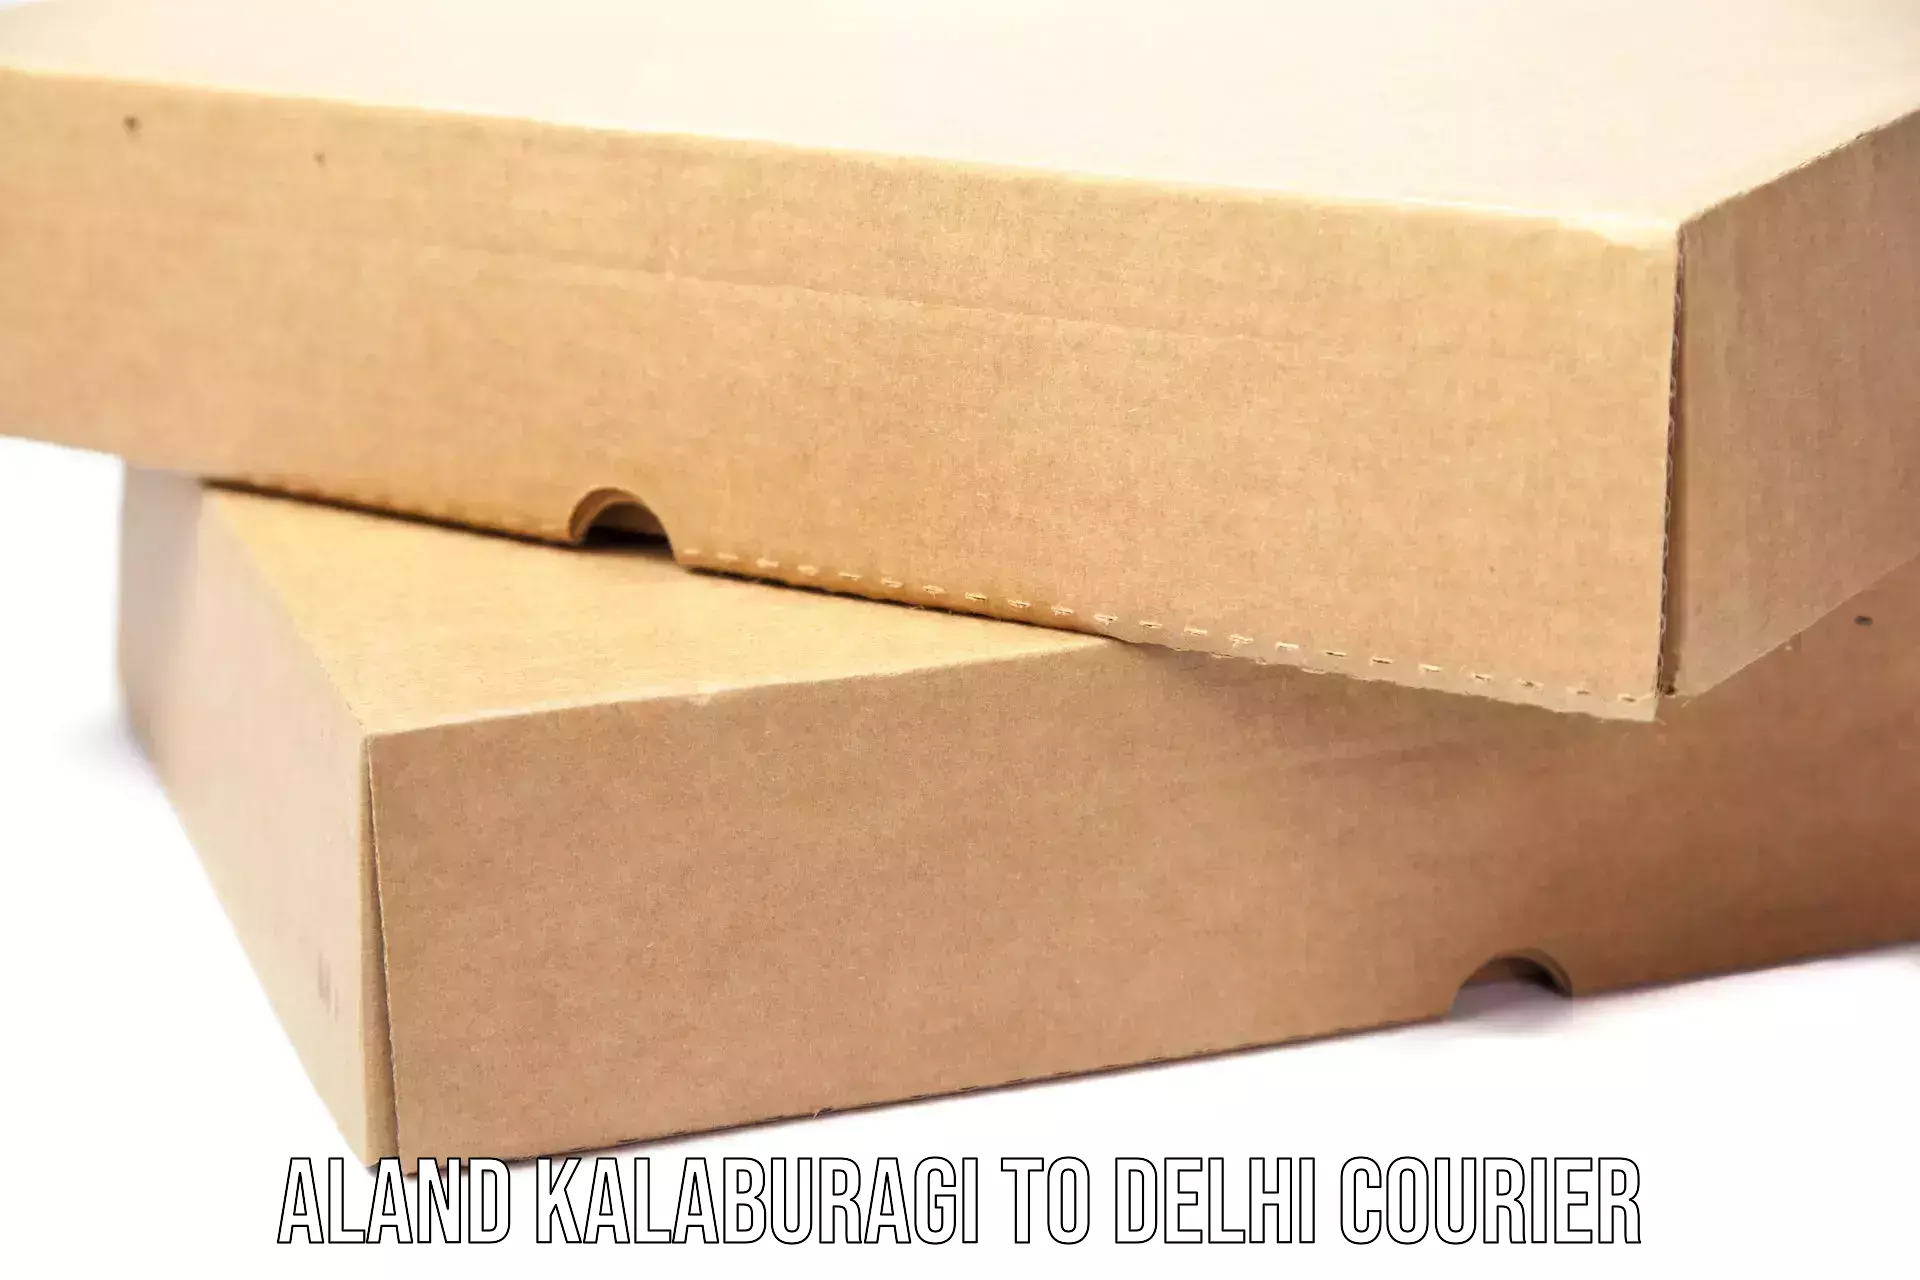 Large package courier Aland Kalaburagi to Delhi